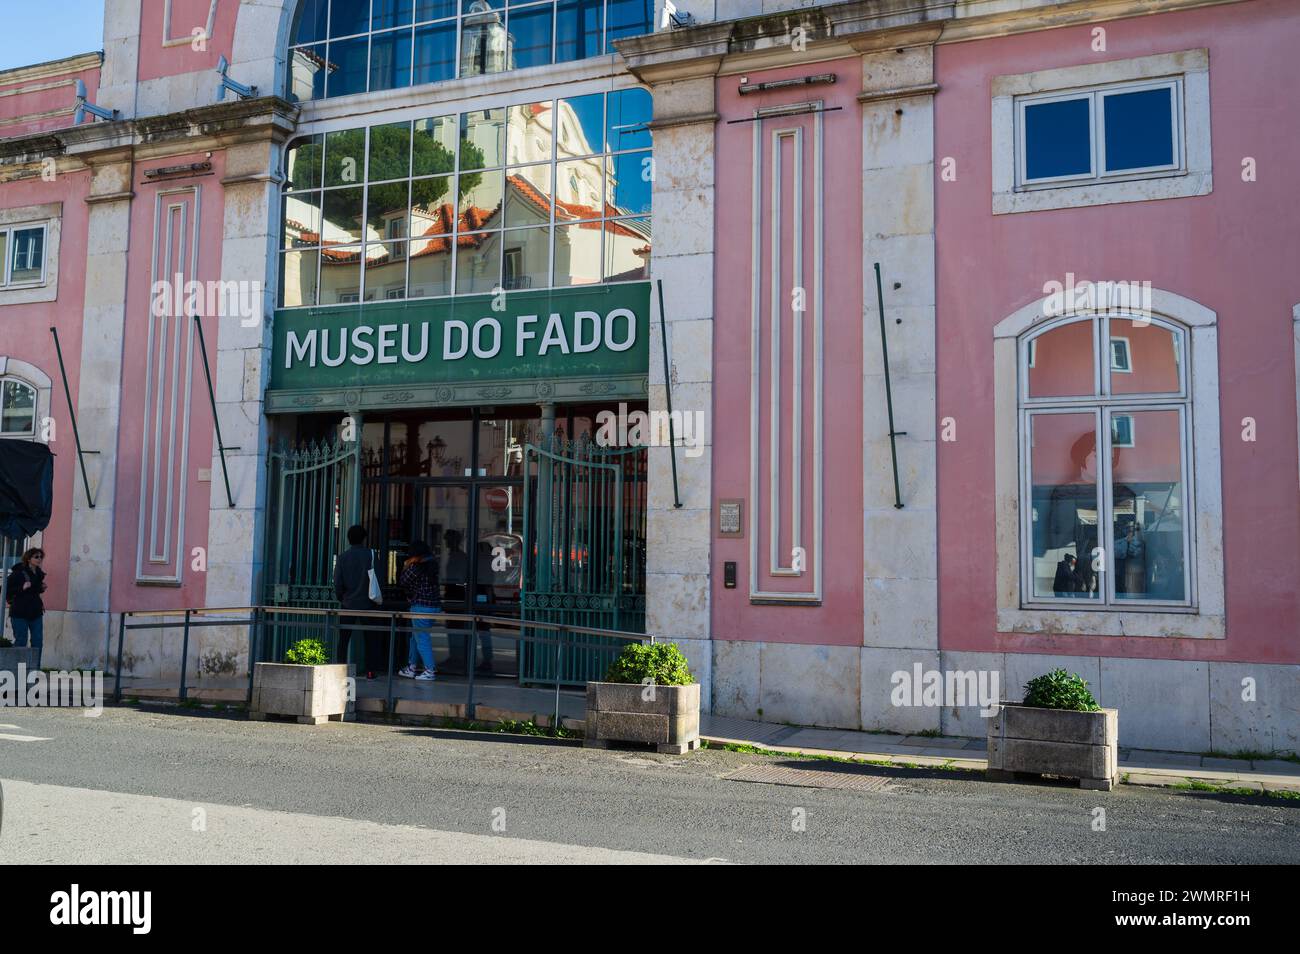 Fado Museum - Museo do Fado -, a music museum dedicated to Fado located in the Lisbon neighbourhood of Alfama, Portugal Stock Photo